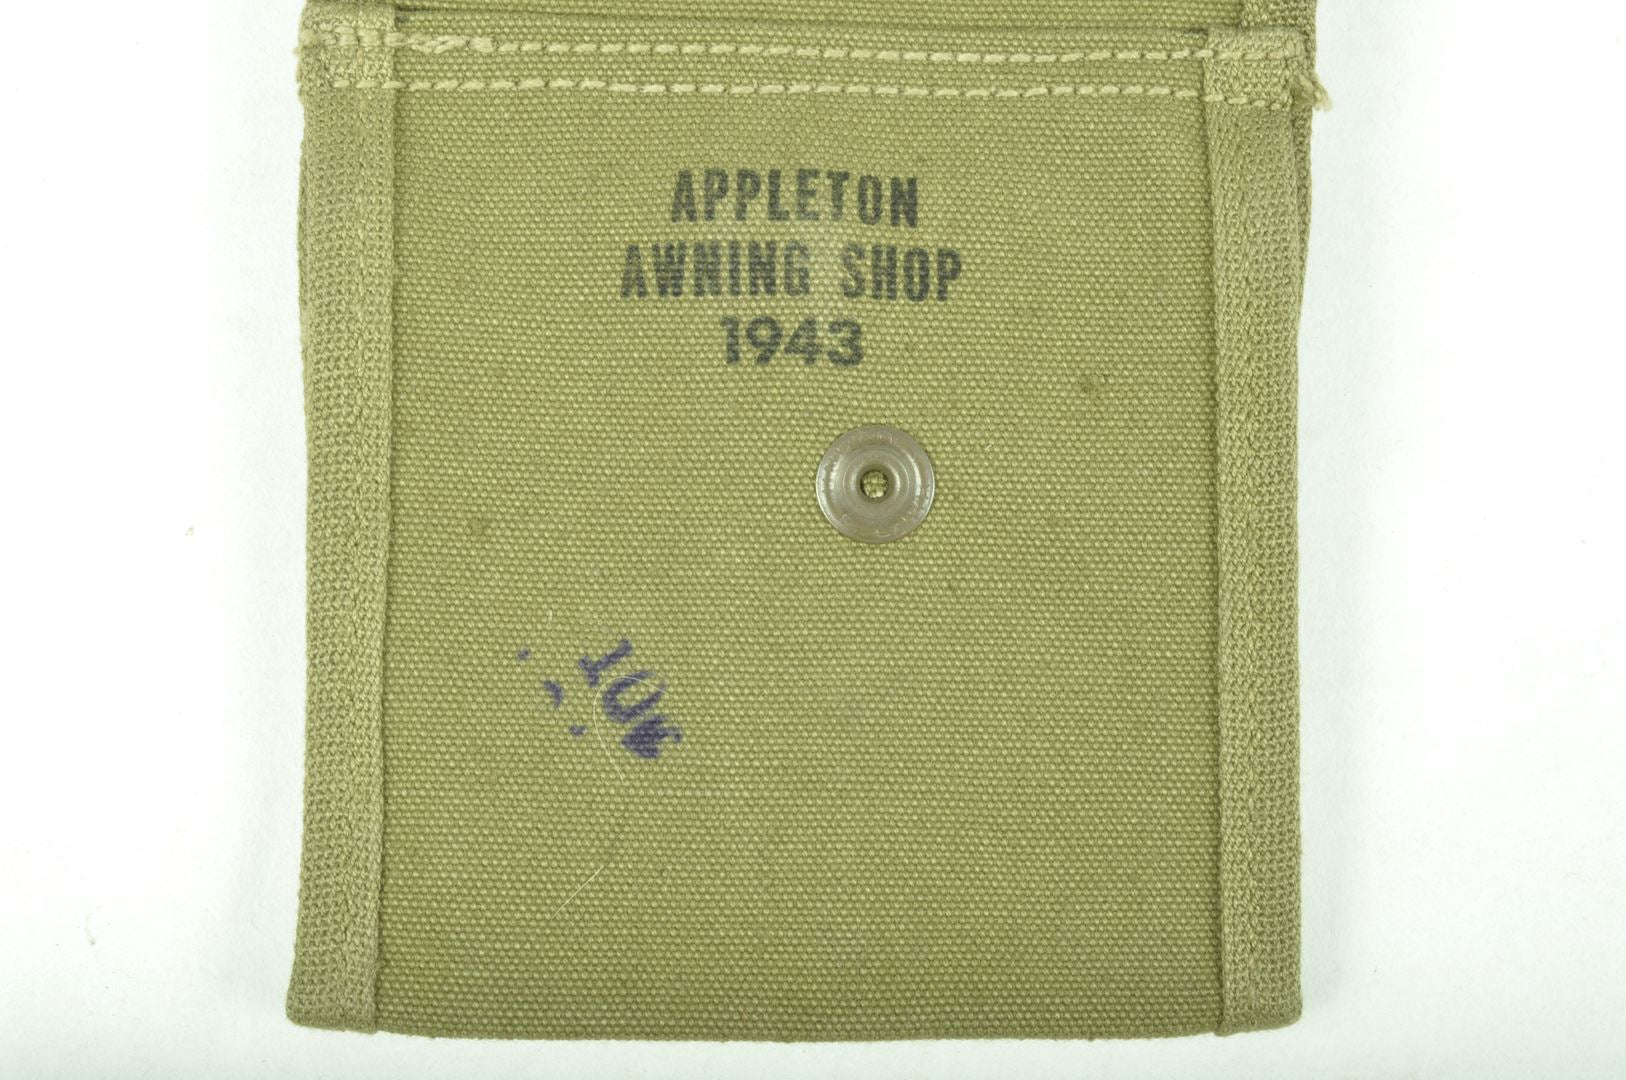 Porte chargeurs USM1 NEUF DE STOCK /APPLETON  AWNING SHOP 1943